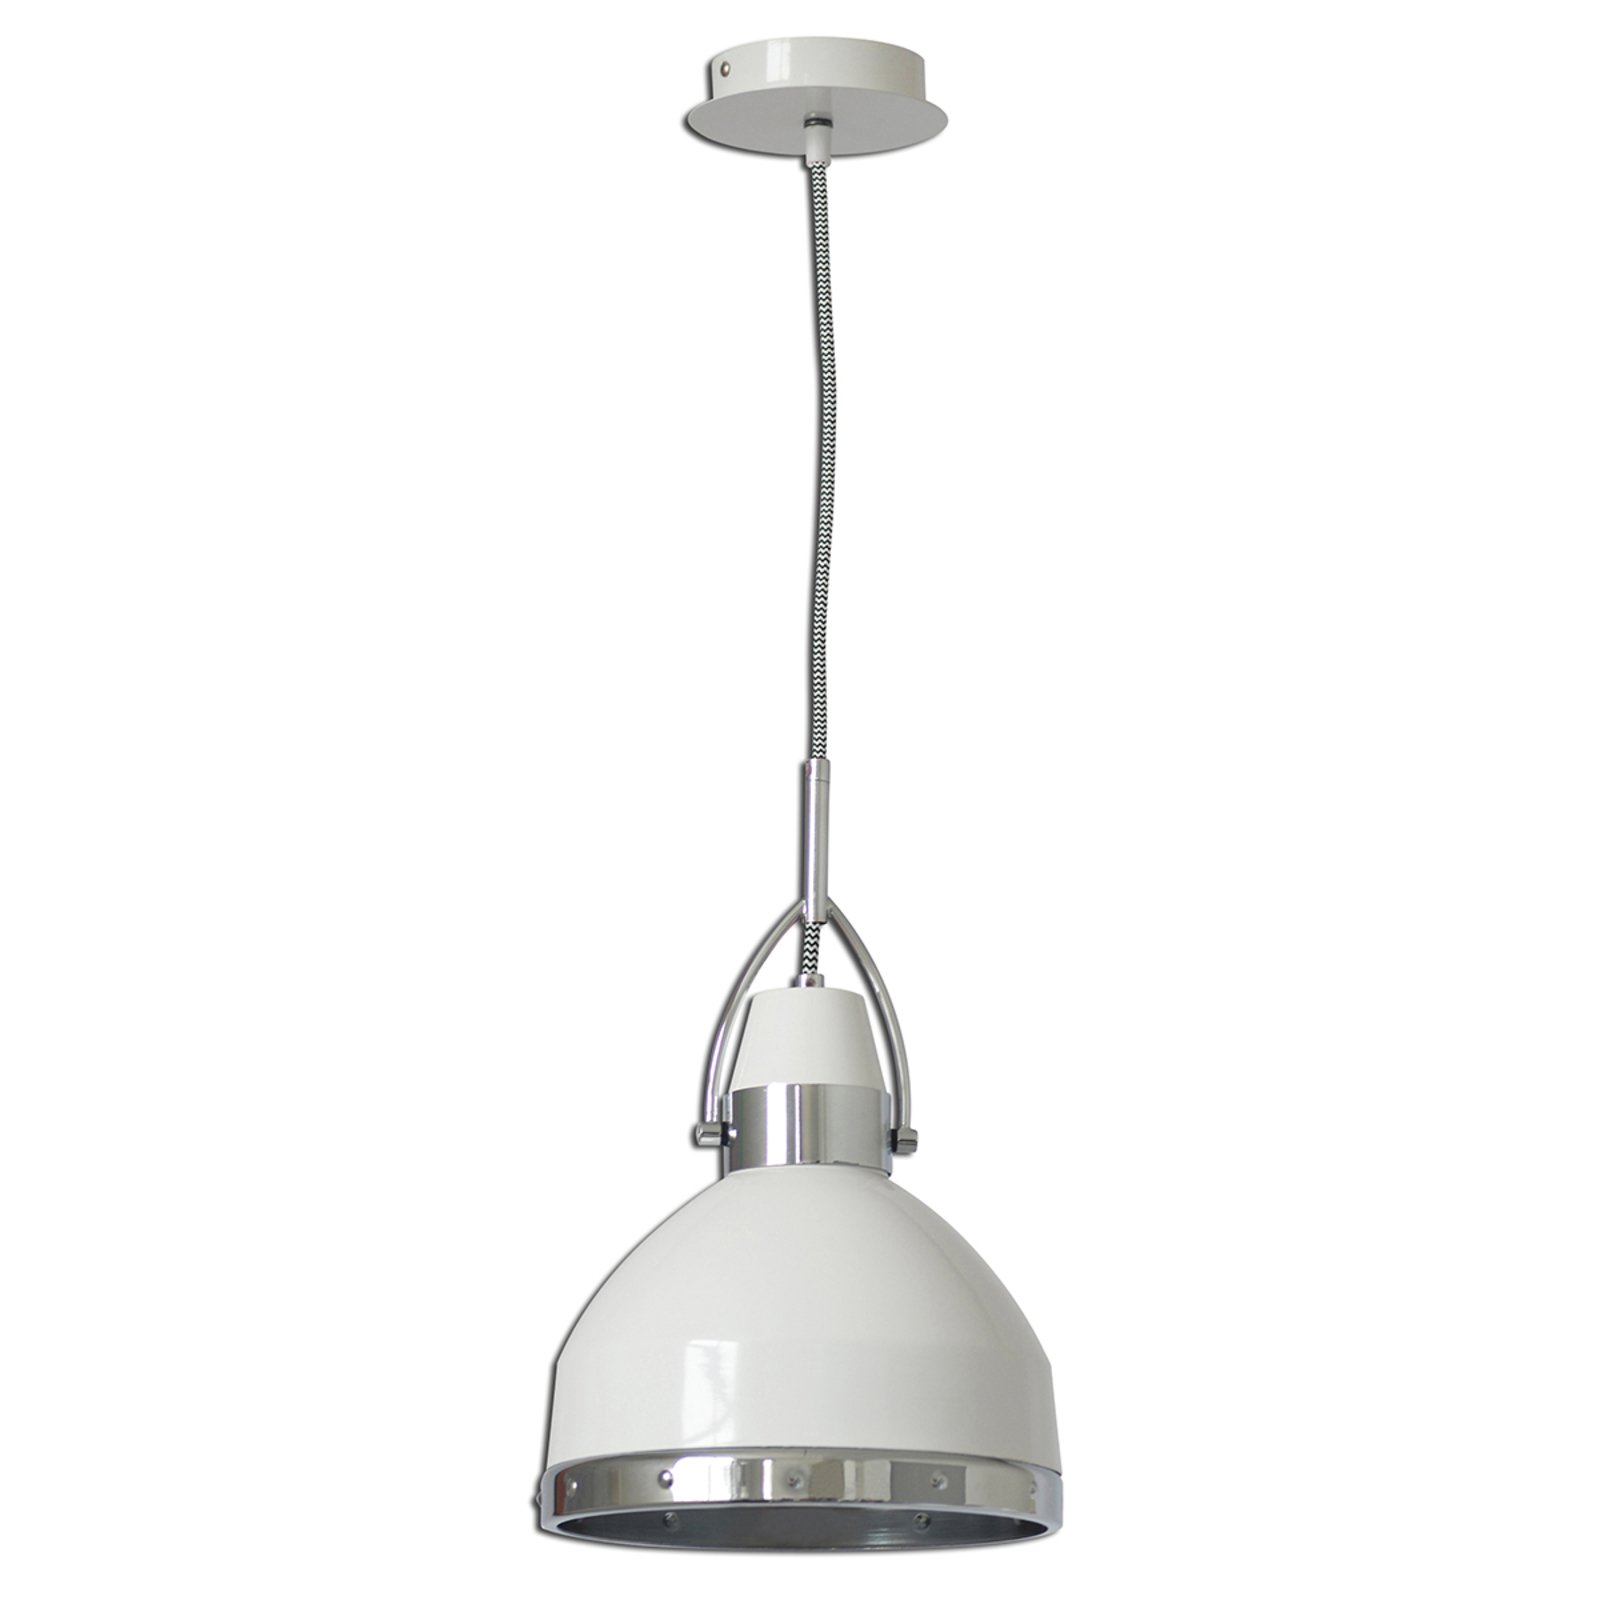 Witte hanglamp Britta in industrial design